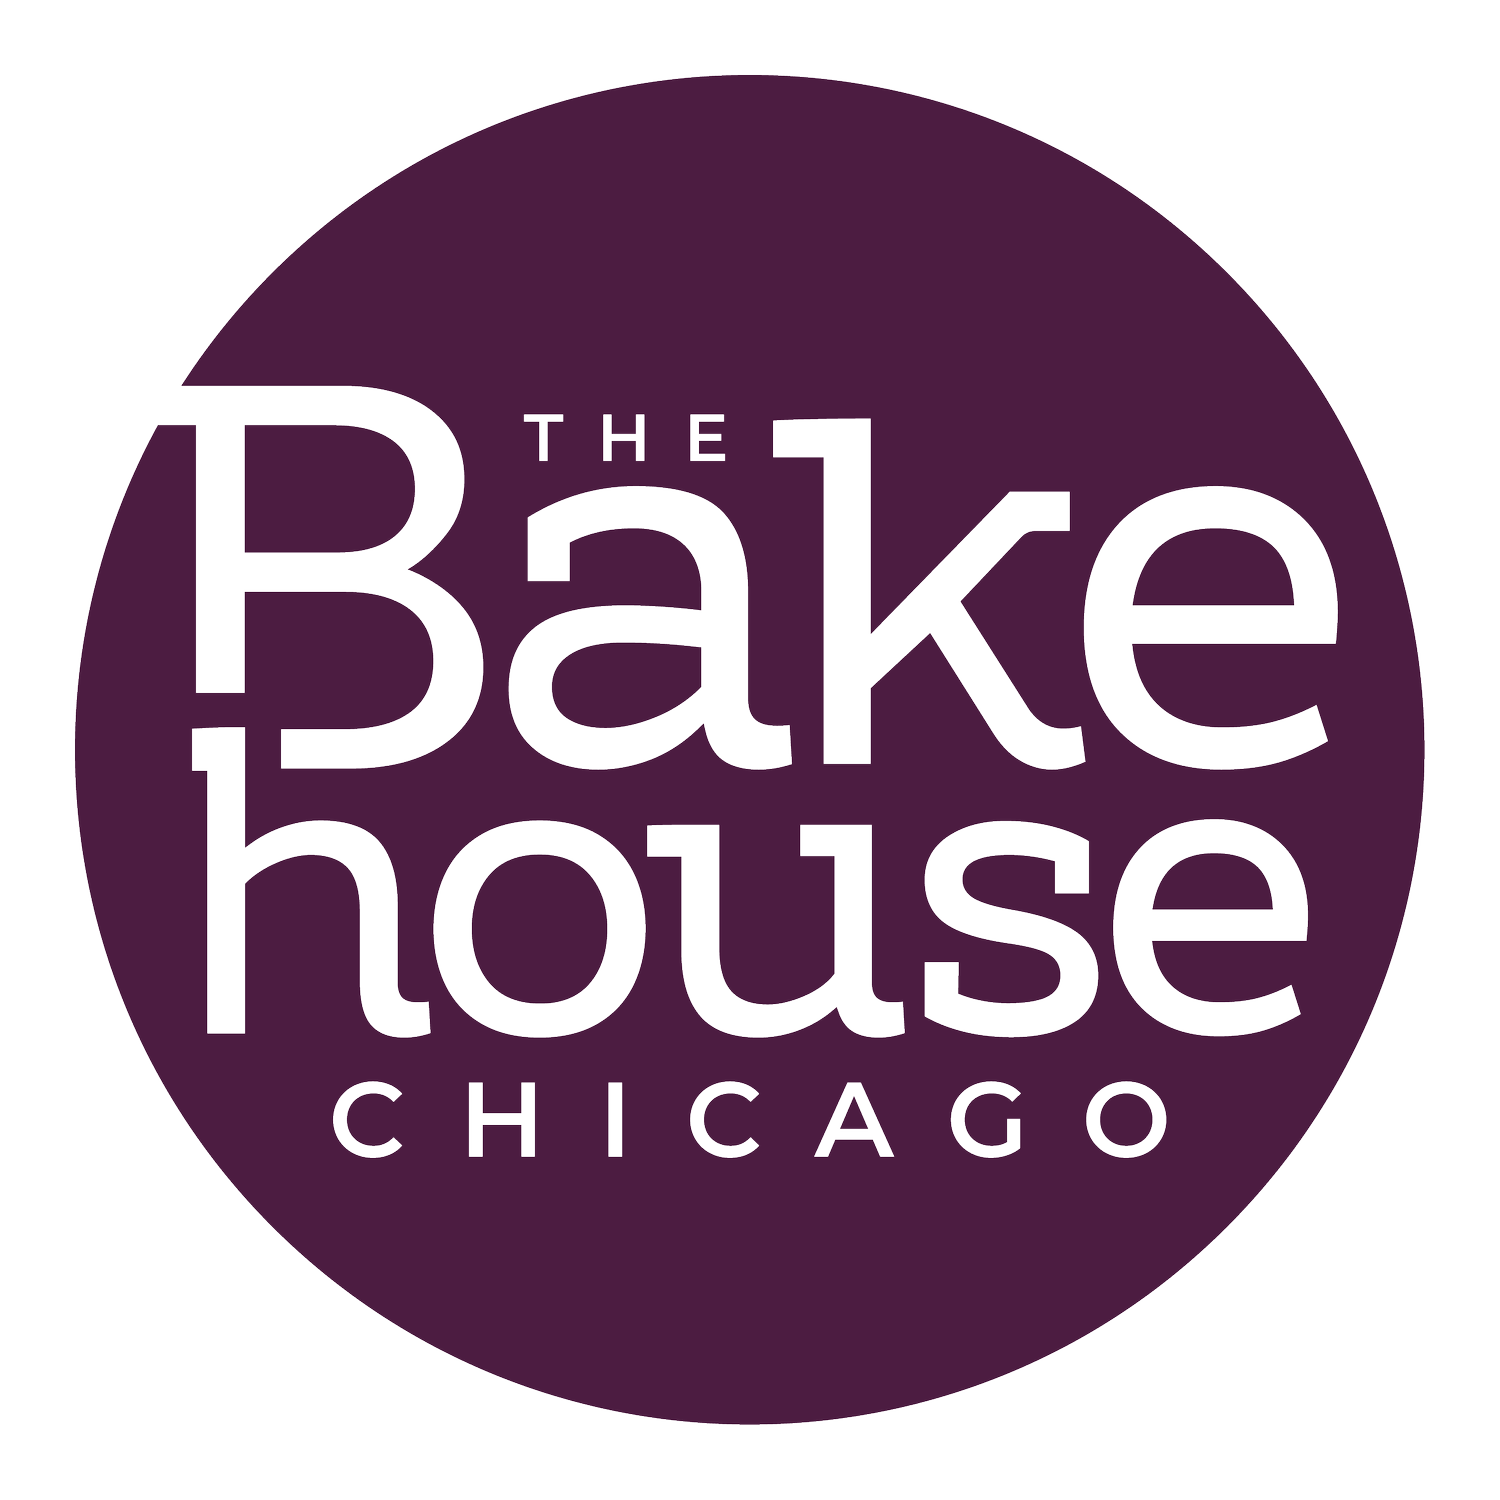 The Bake House Chicago